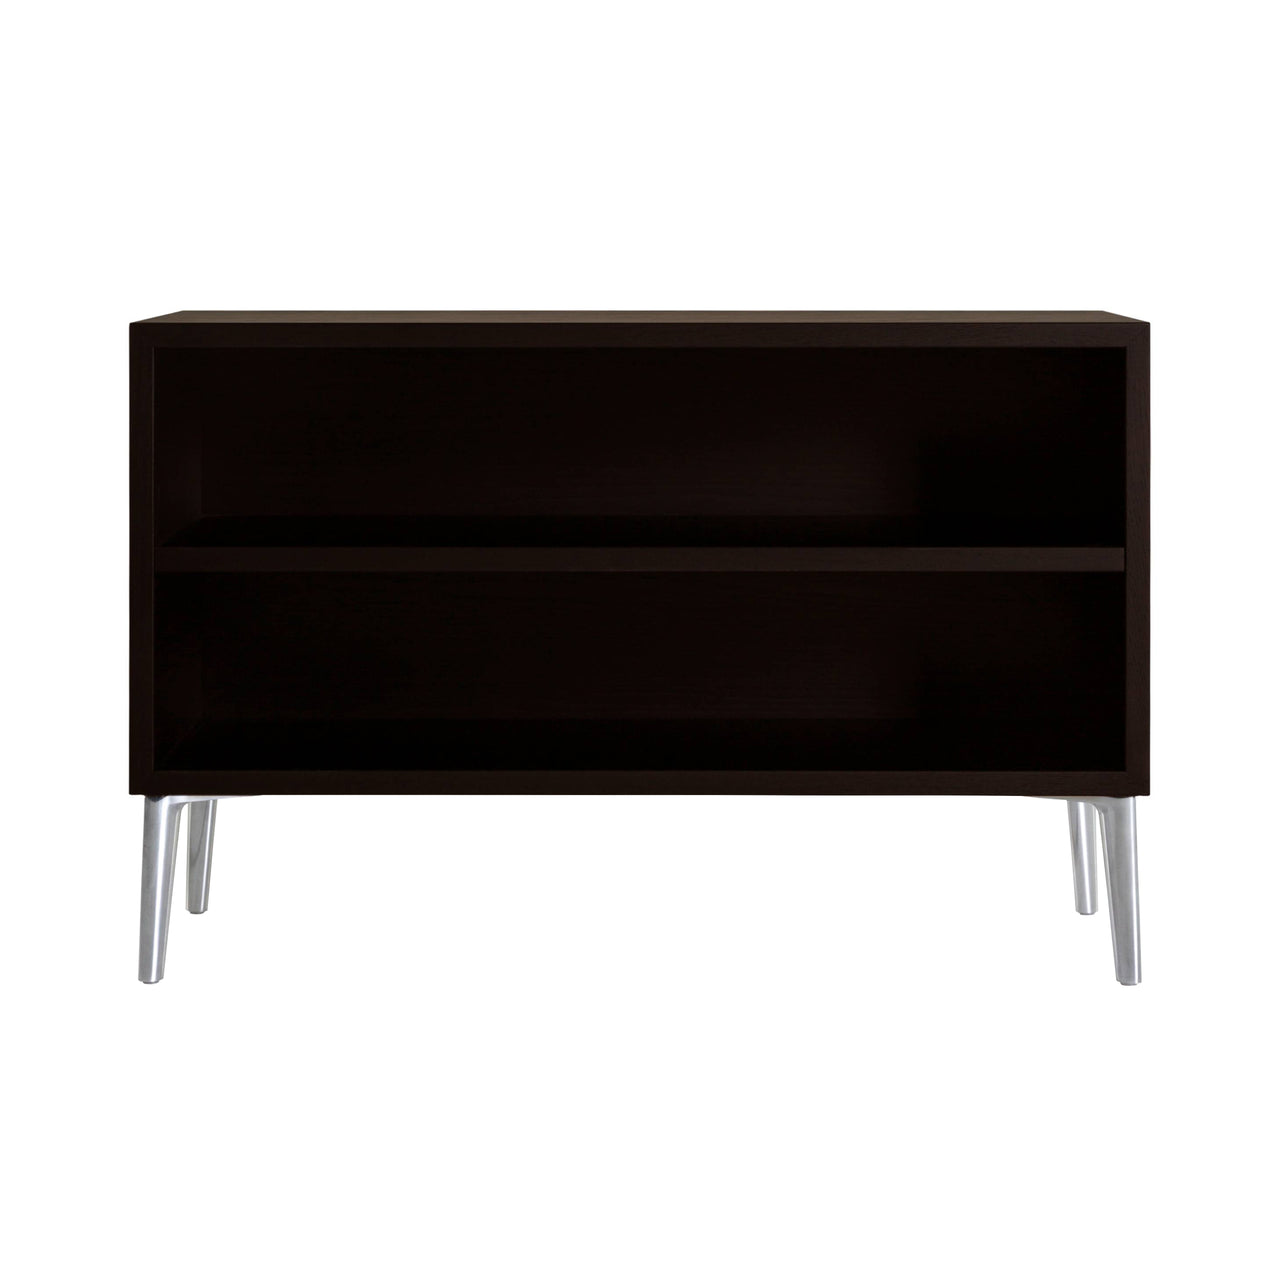 Sofa So Good Demi Double Shelf: Wenge